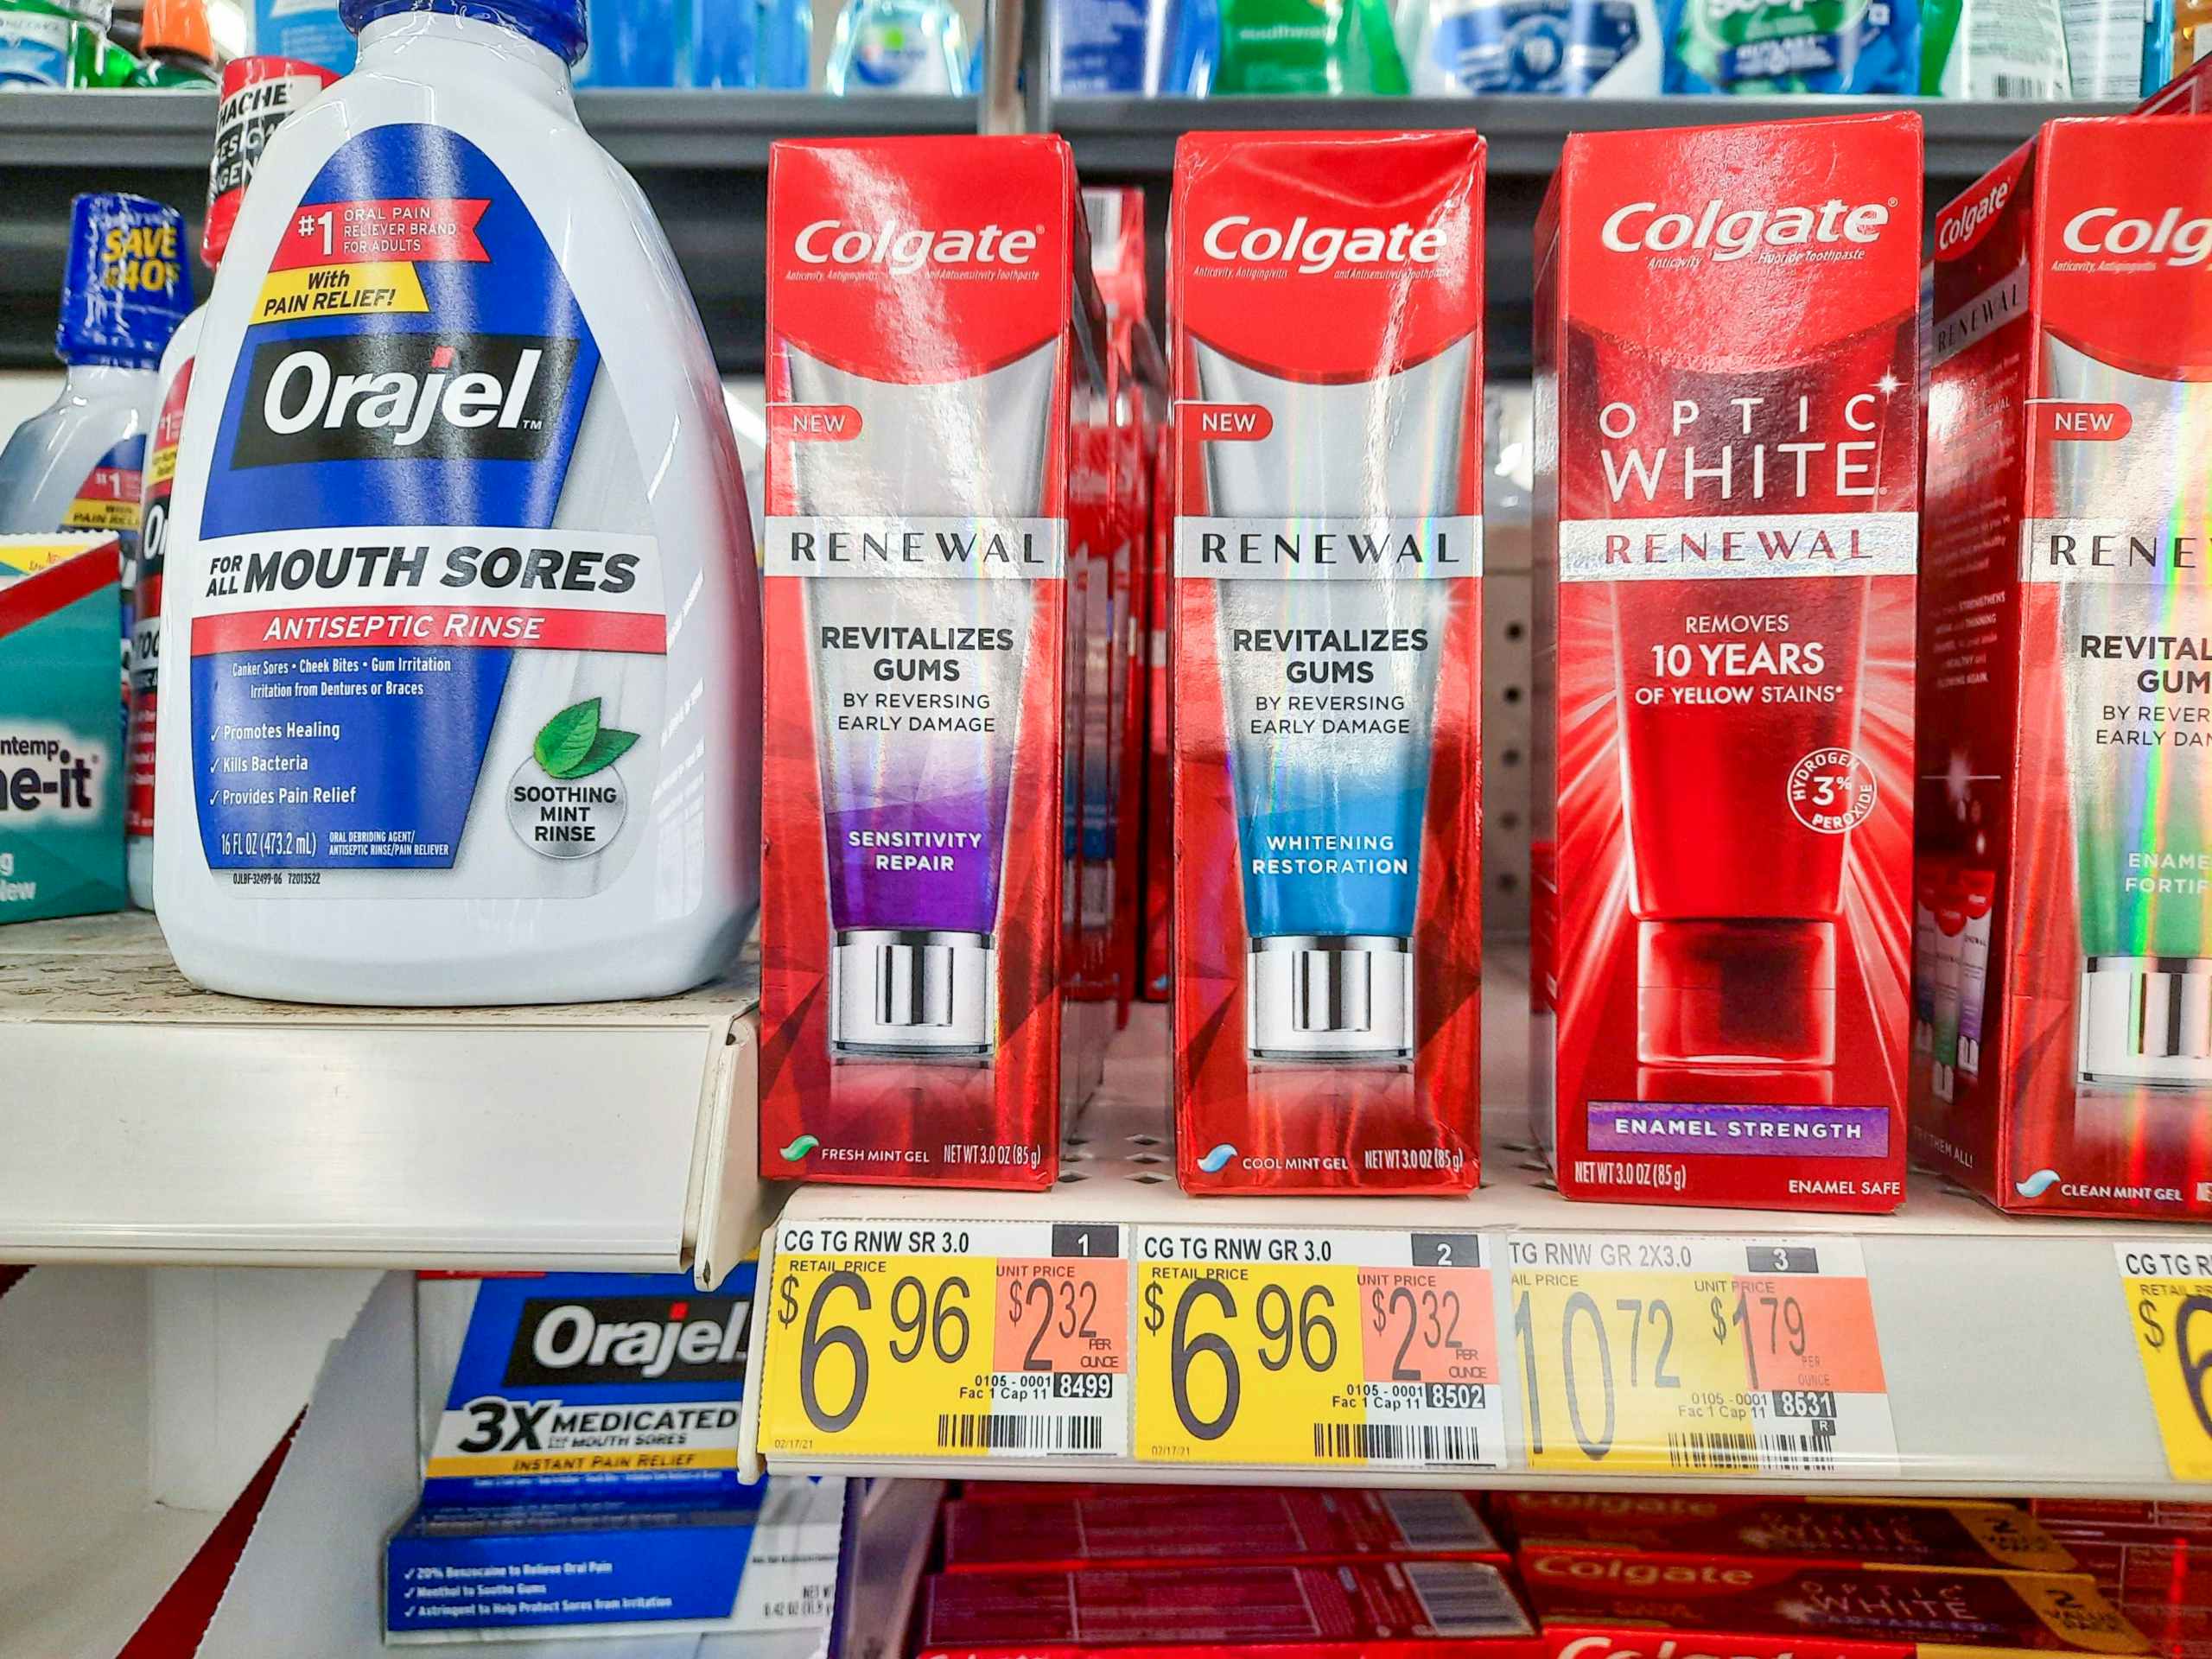 Colgate tootpaste on store shelf